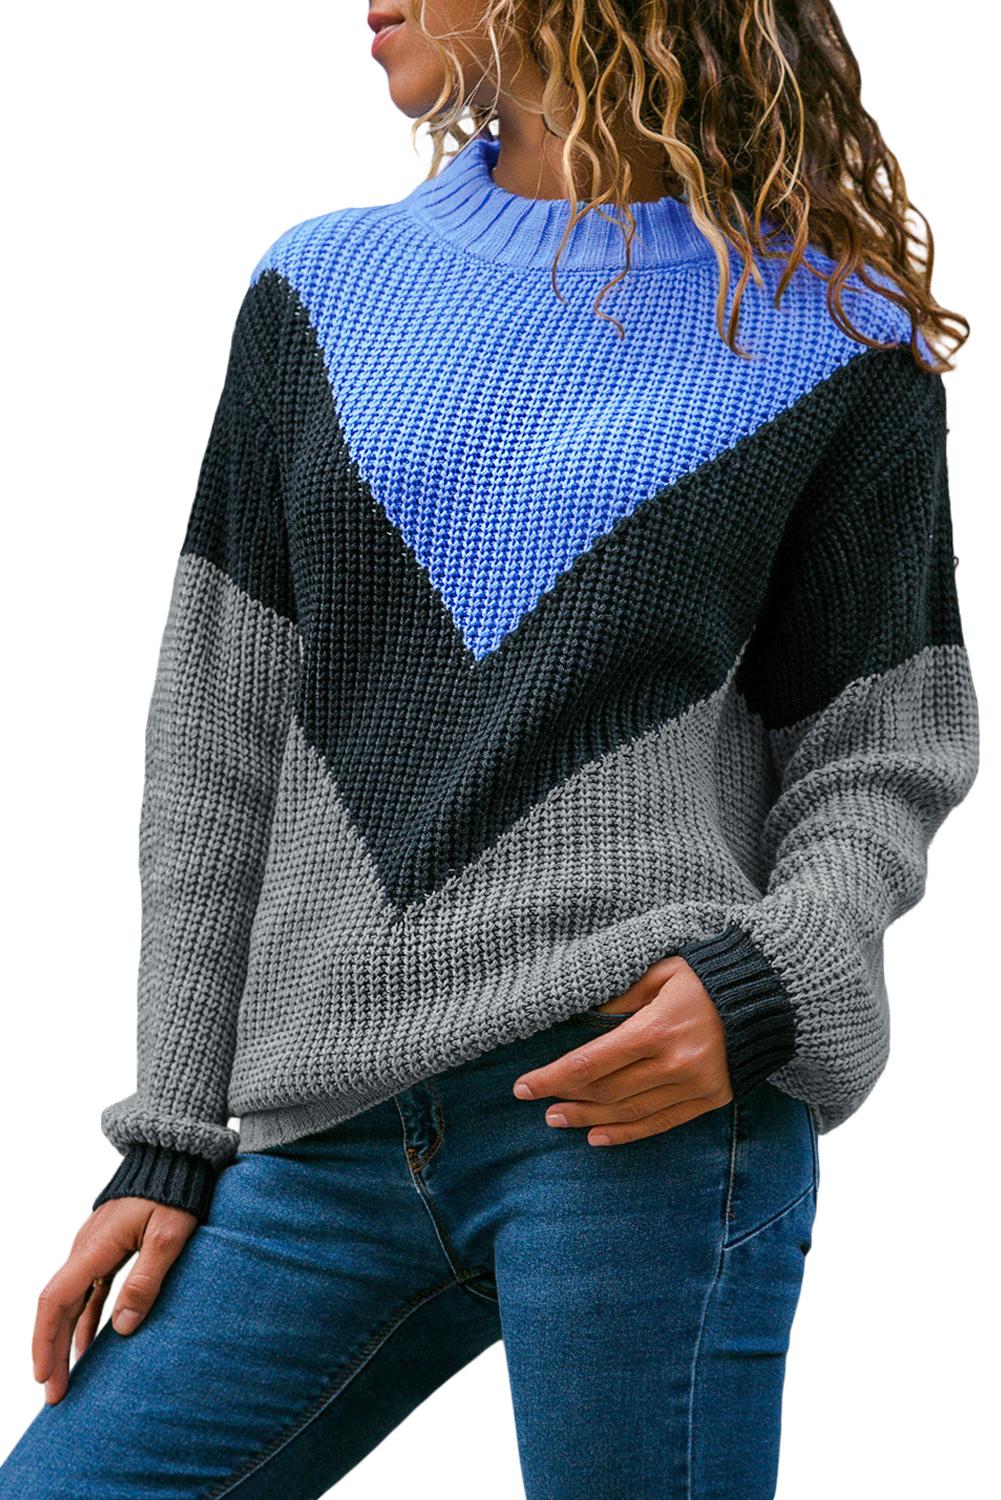 Chevron Accent Blue Grey Sweater